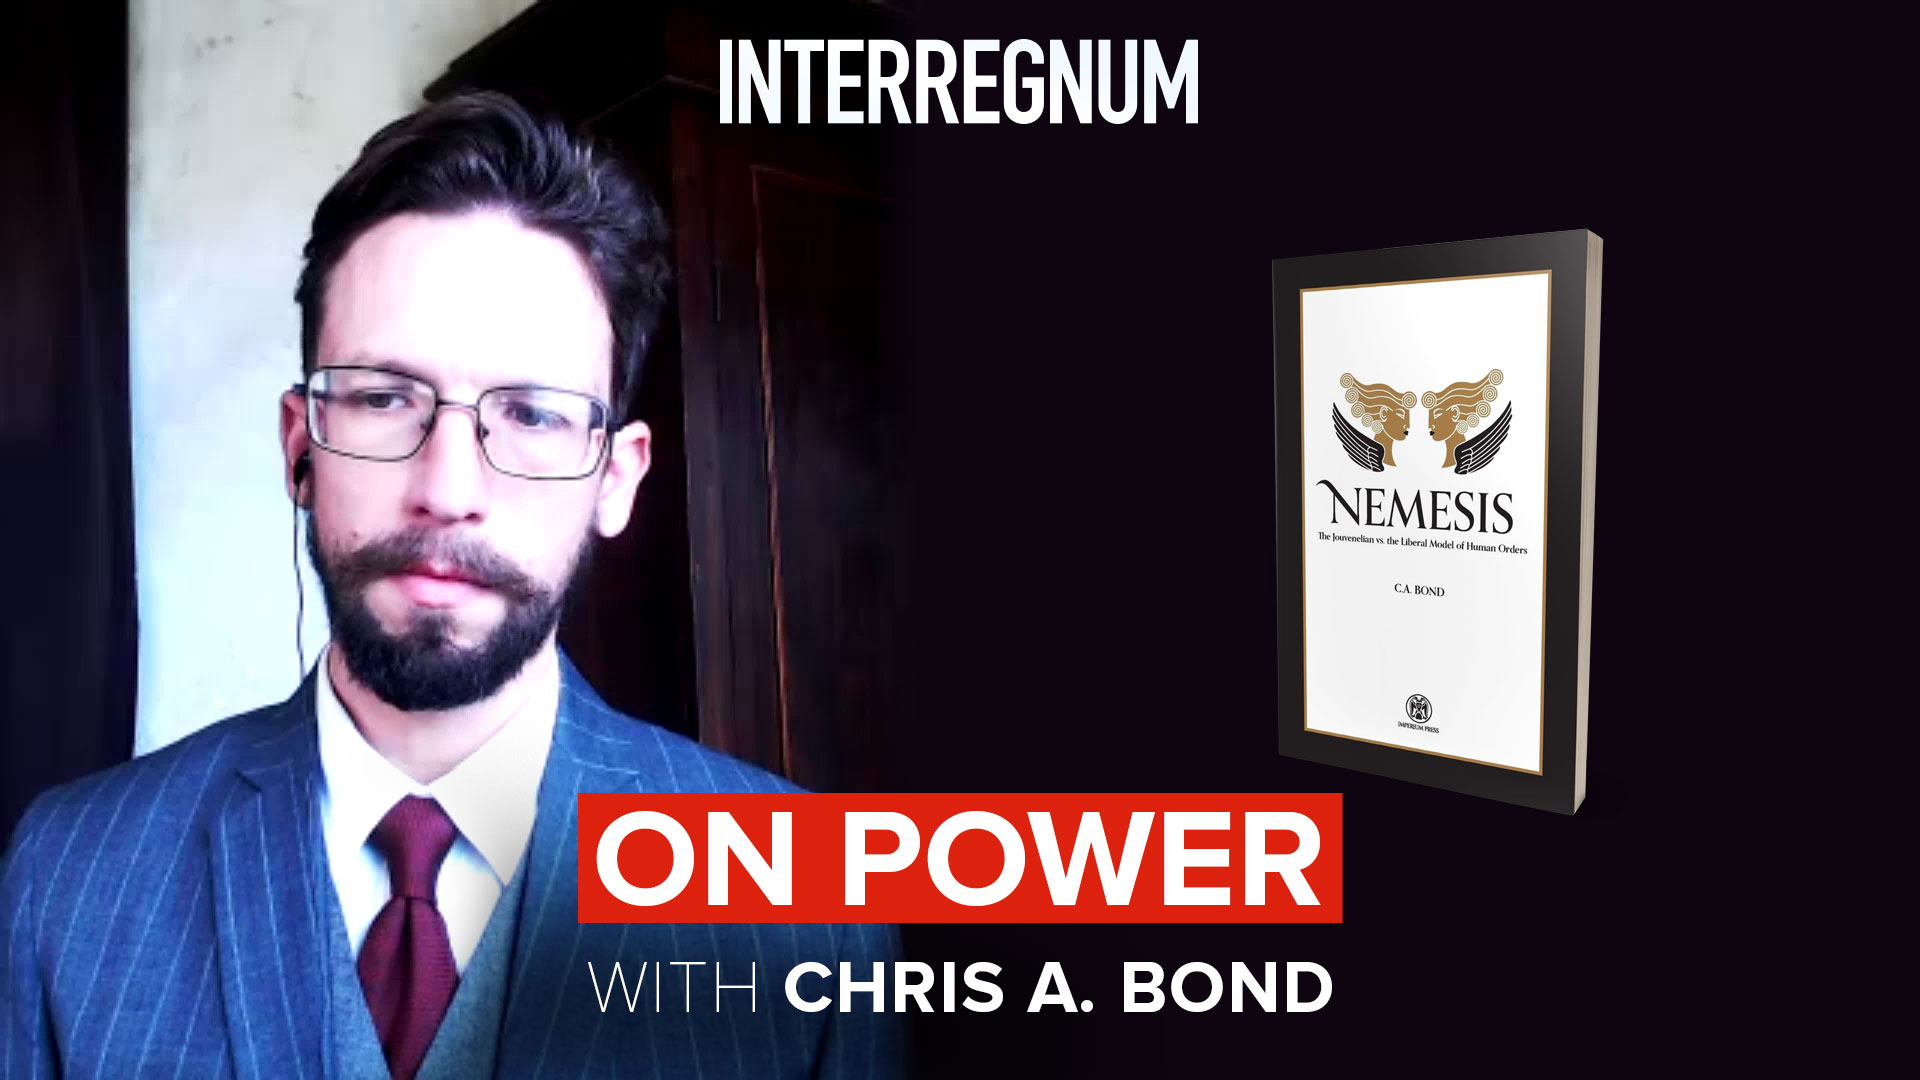 Chris A. Bond on Power